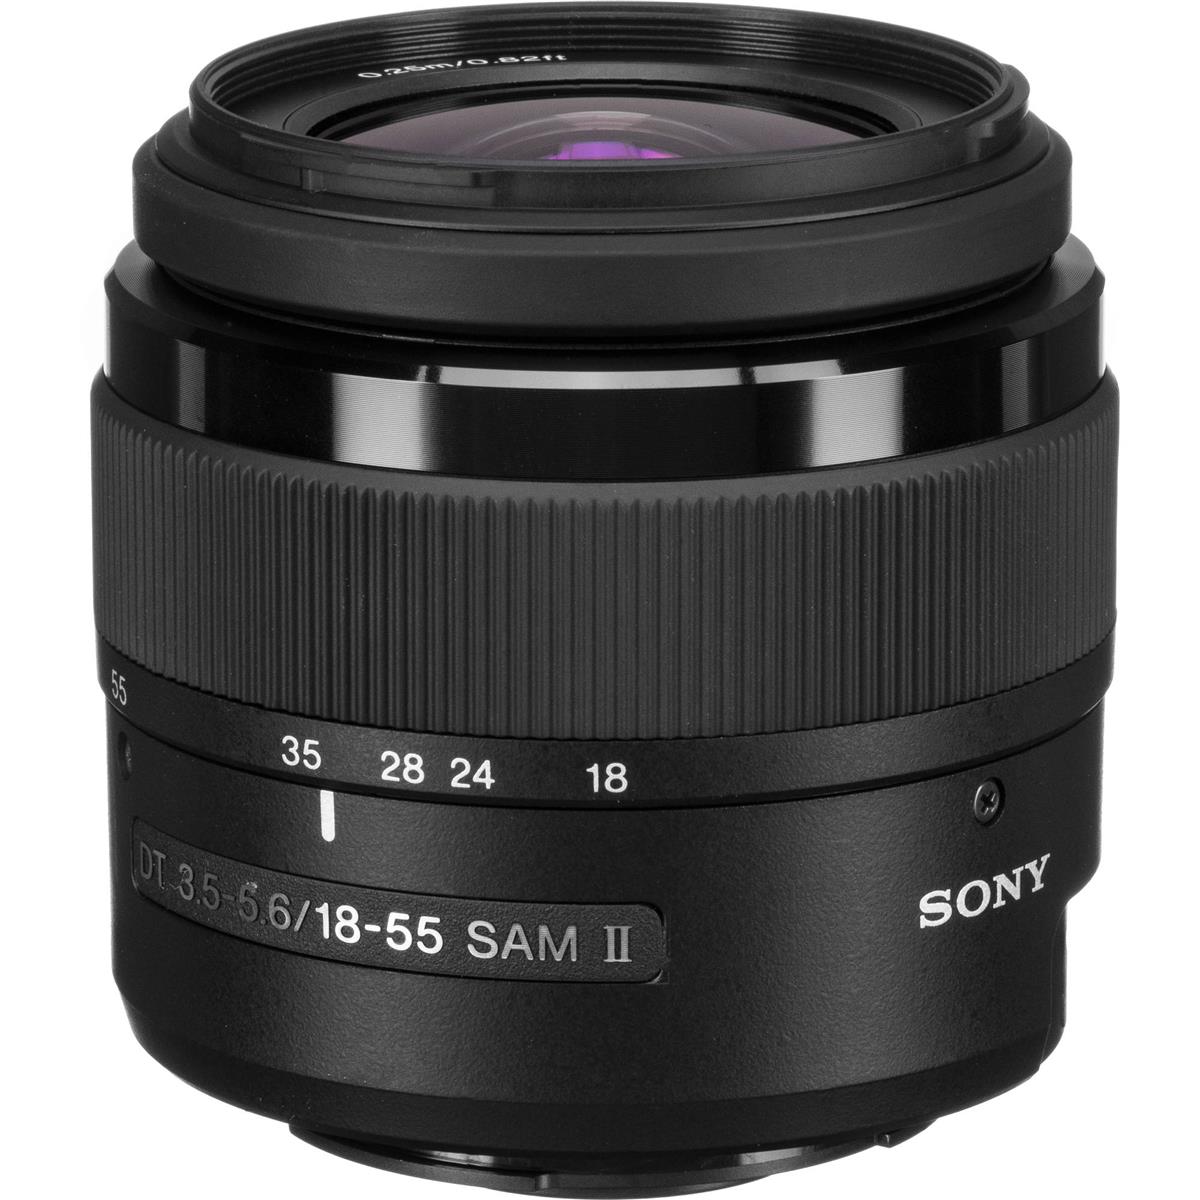 Image of Sony 18-55mm f/3.5-5.6 DT SAM A-Mount Zoom Lens